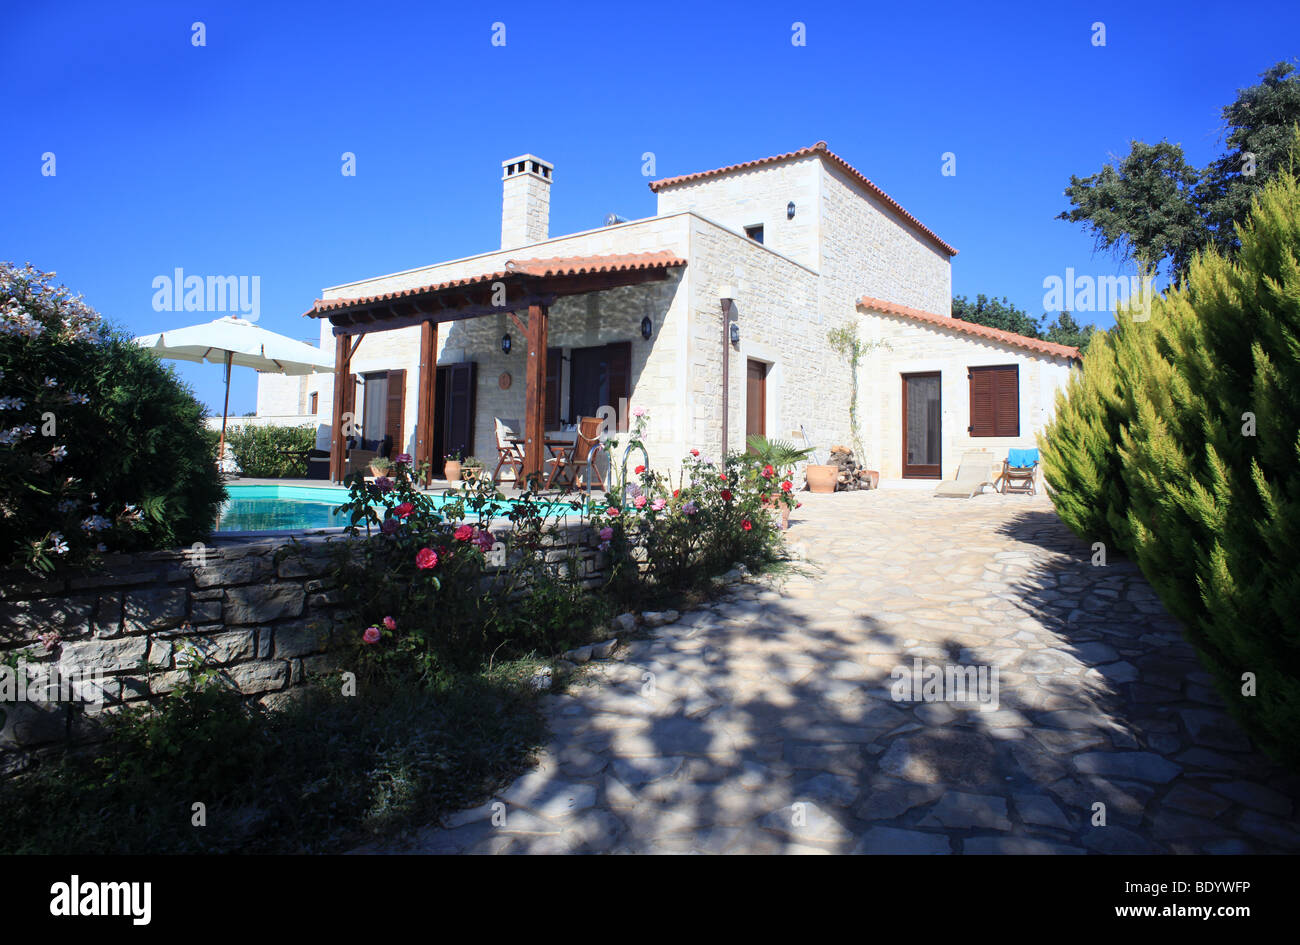 A luxury Greek holiday home or rental villa on the Mediterranean island of Crete Stock Photo